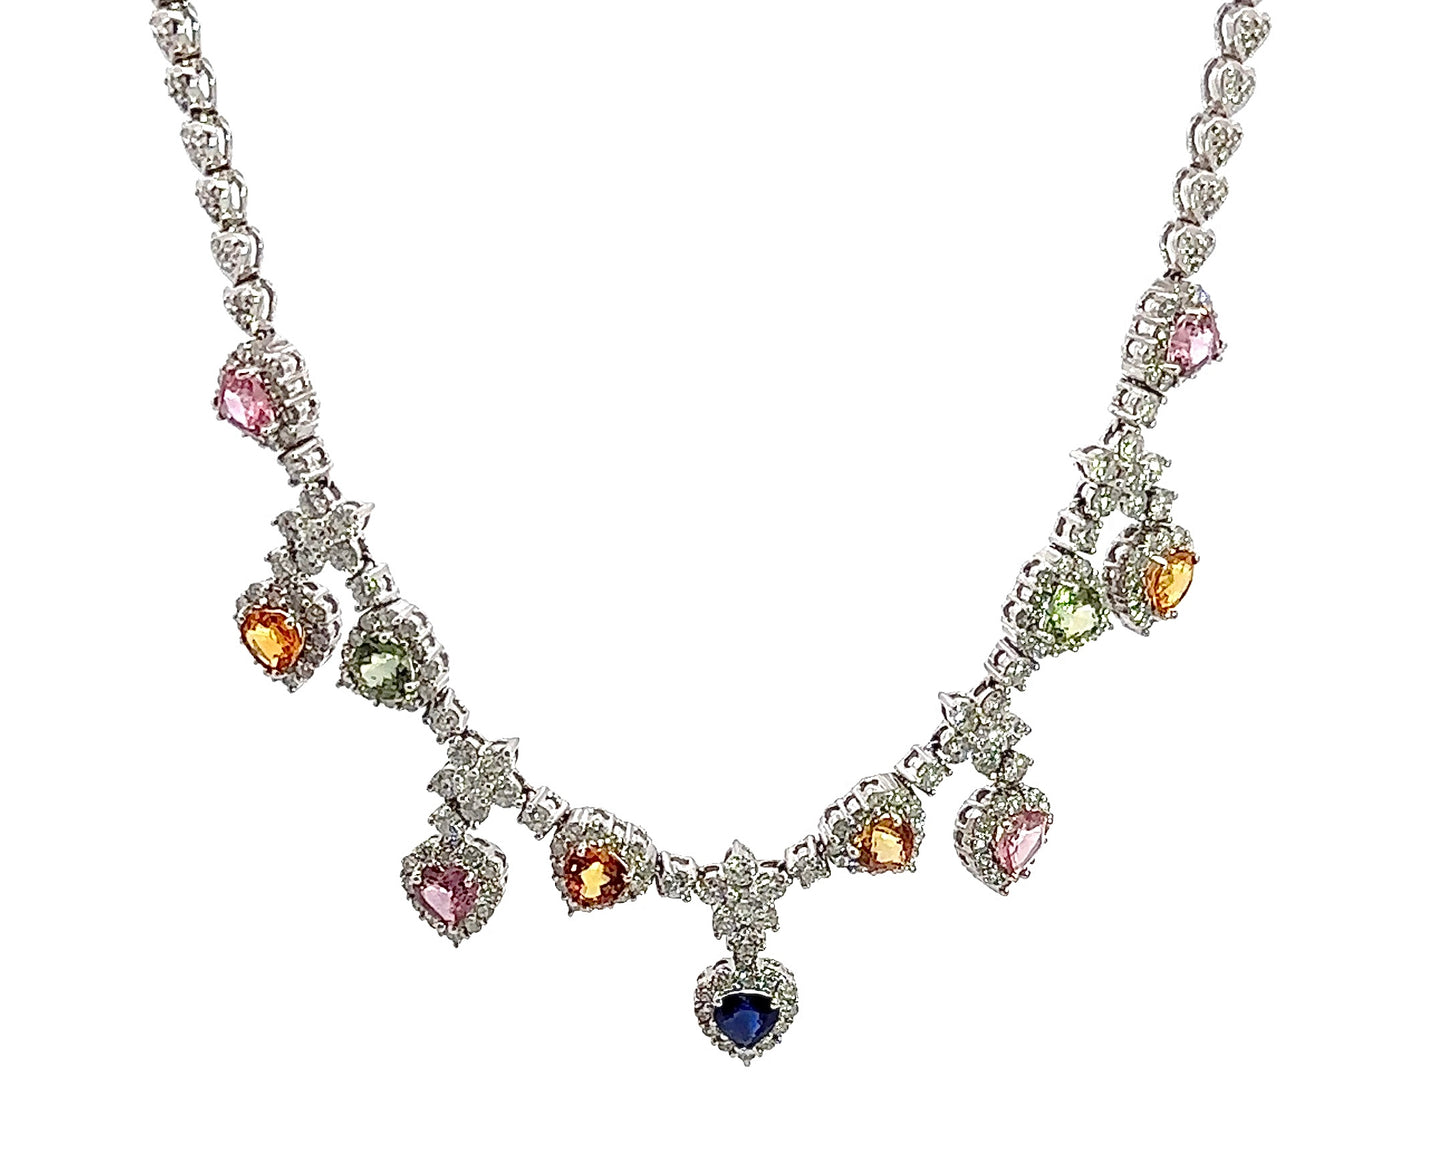 hanging white gold diamond necklace with 4 pink heart-shaped stones, 4 orange heart shaped stones, 2 green heart shaped stones, and 1 centered blue heart shape stone